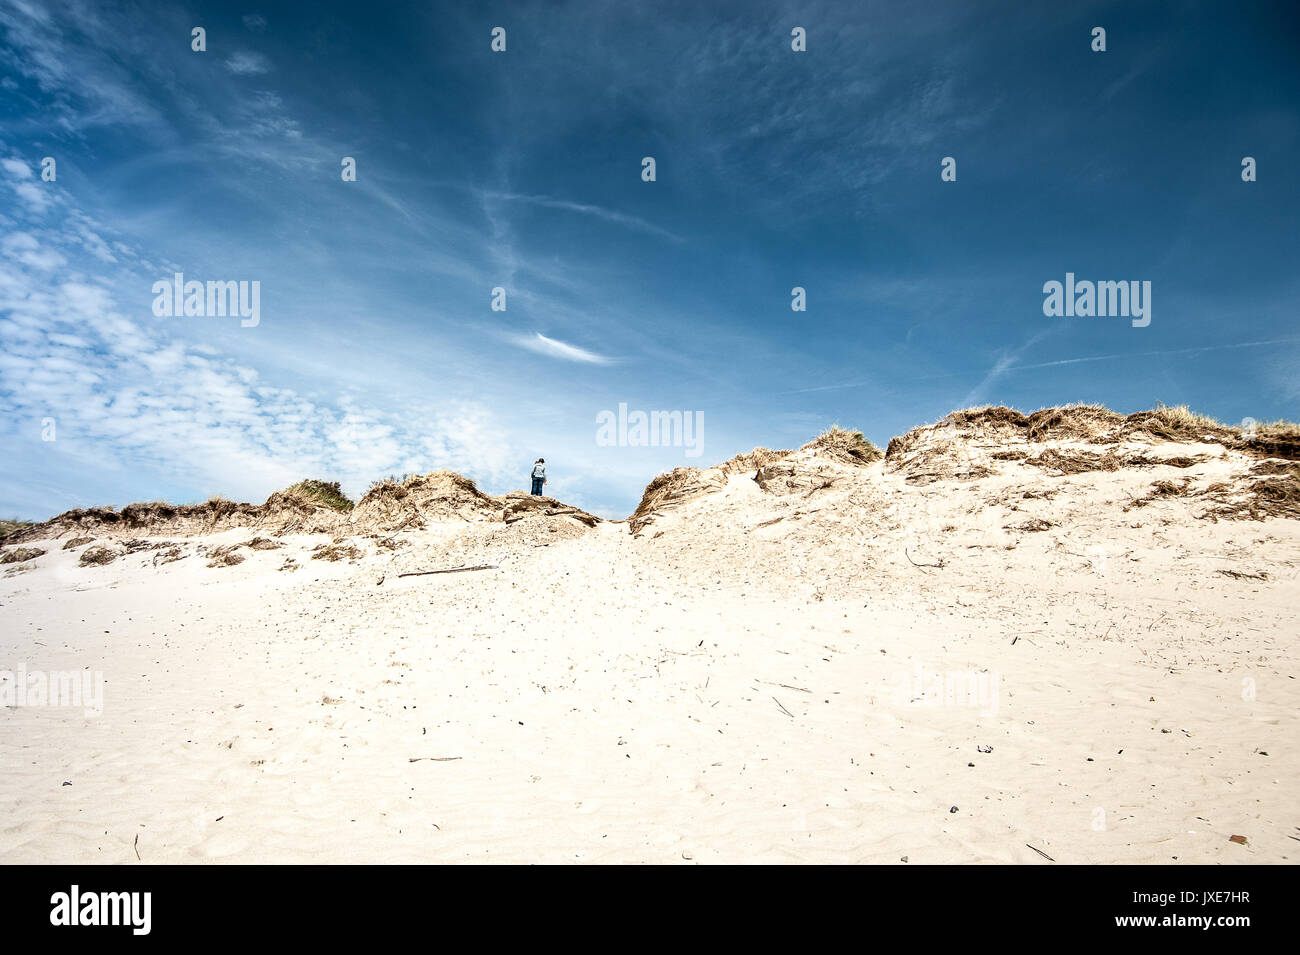 man on dune, Denmark Stock Photo